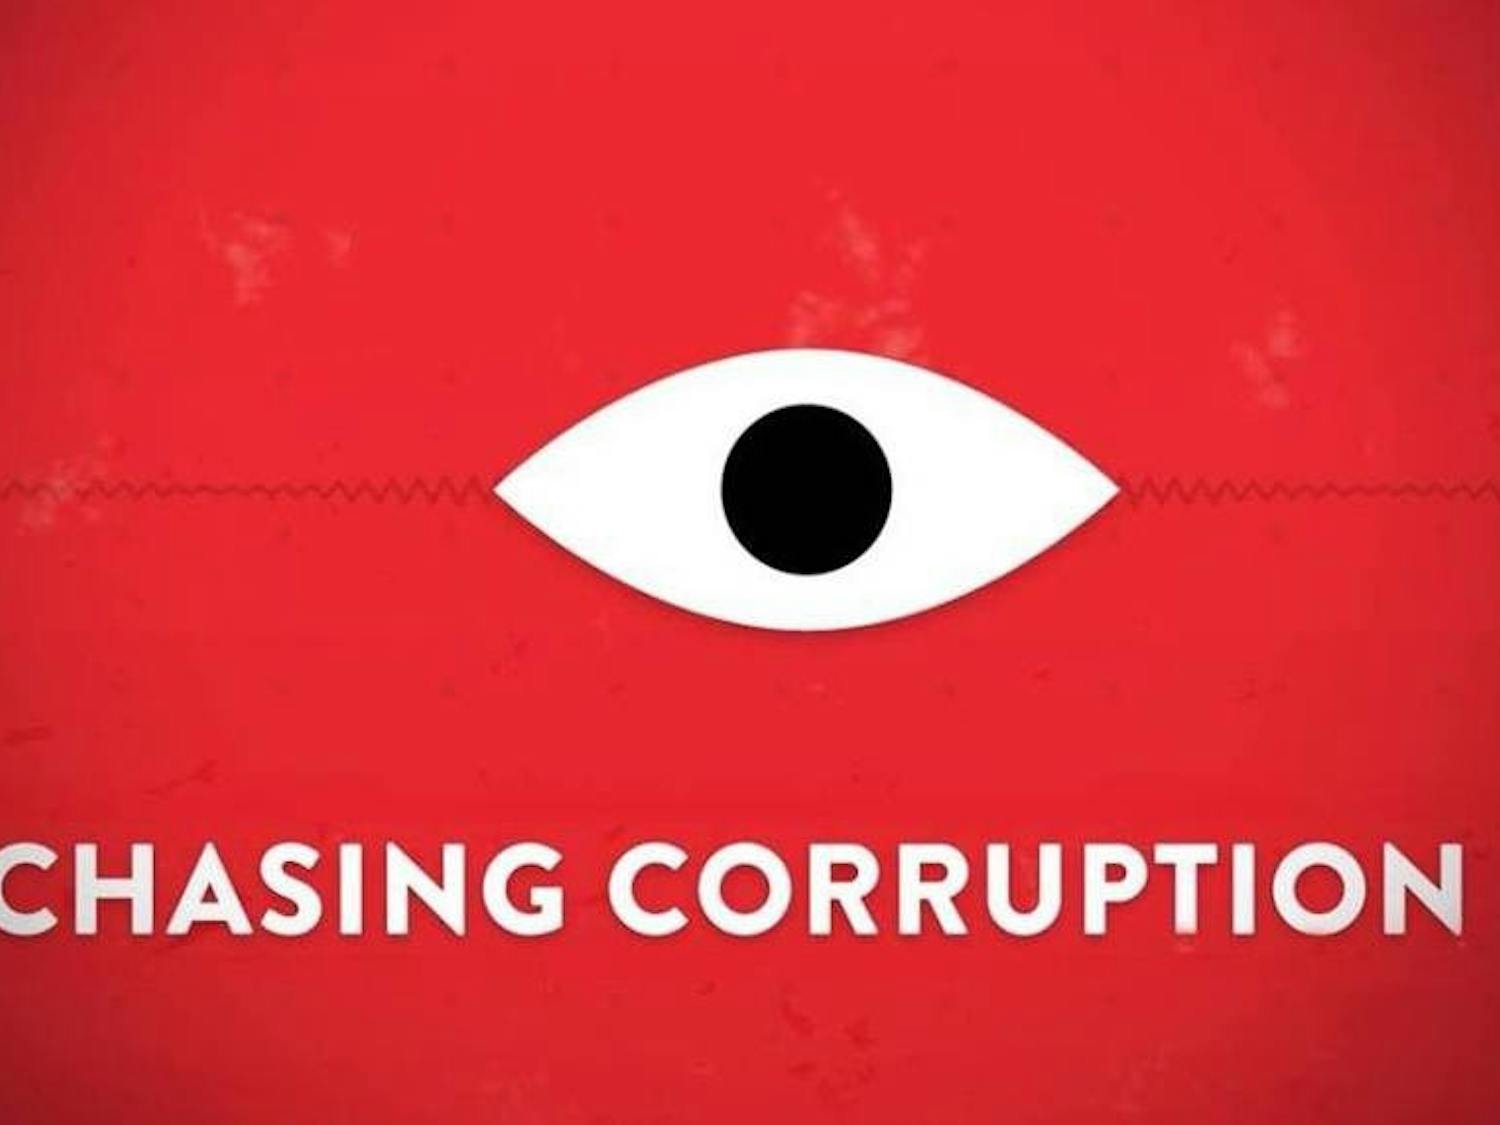 Chasing corruption.jpg